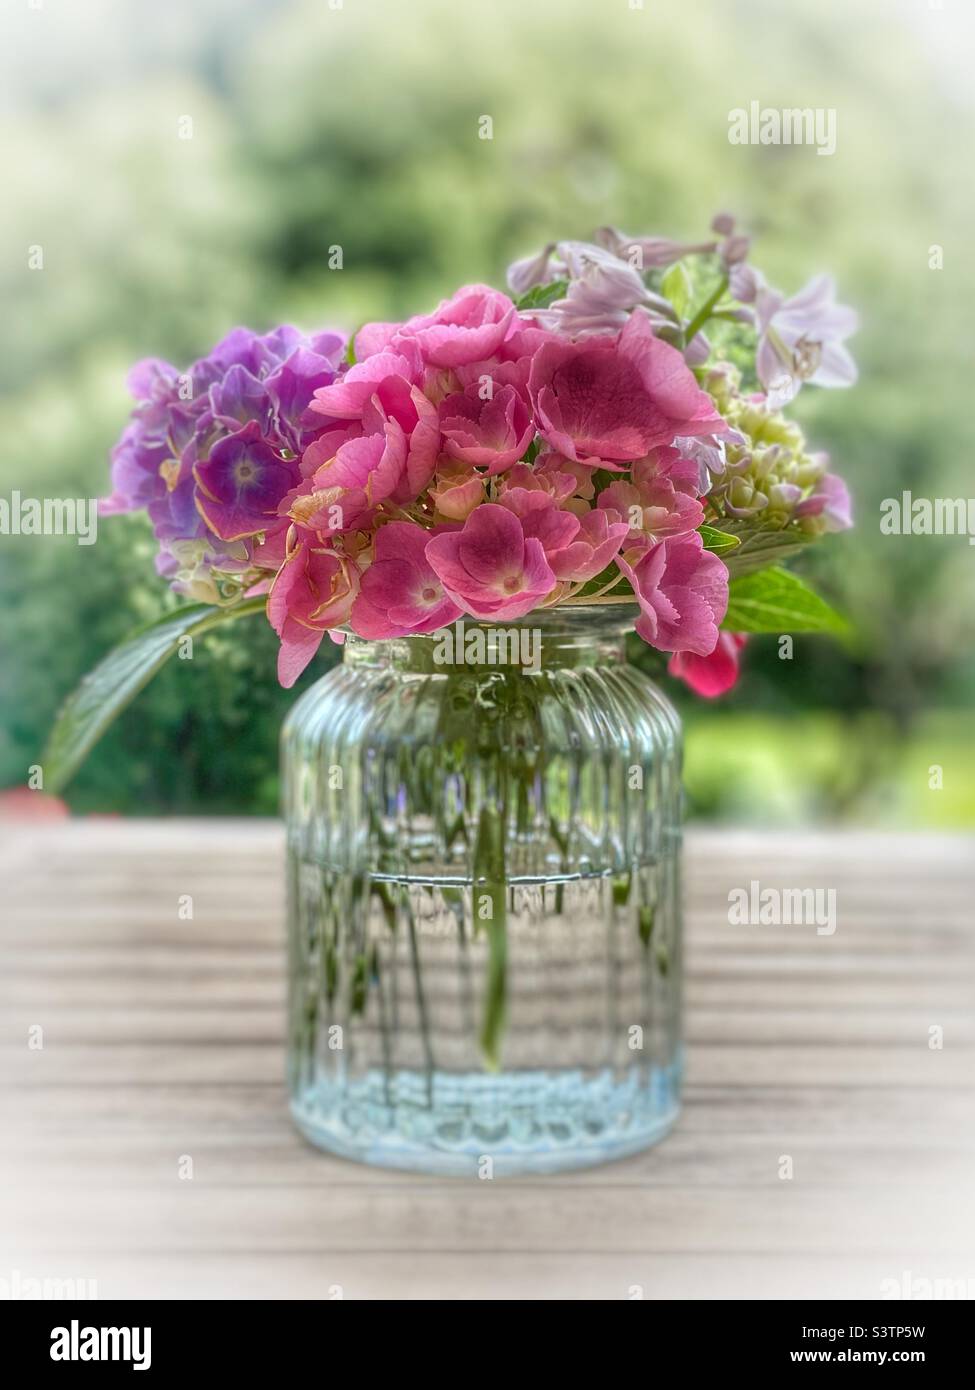 Vase of flowers outside Stock Photo